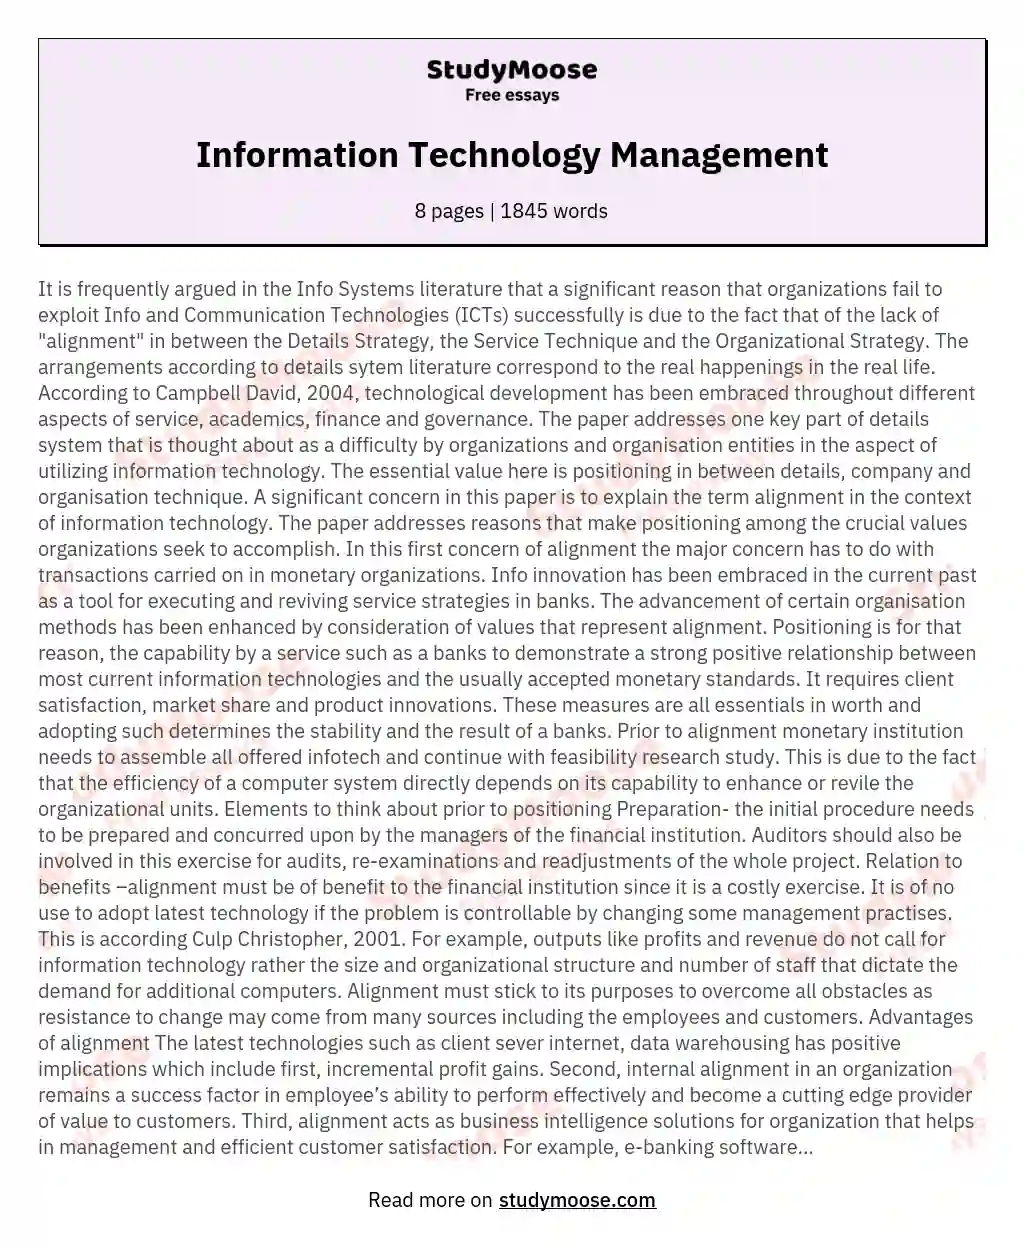 Information Technology Management essay